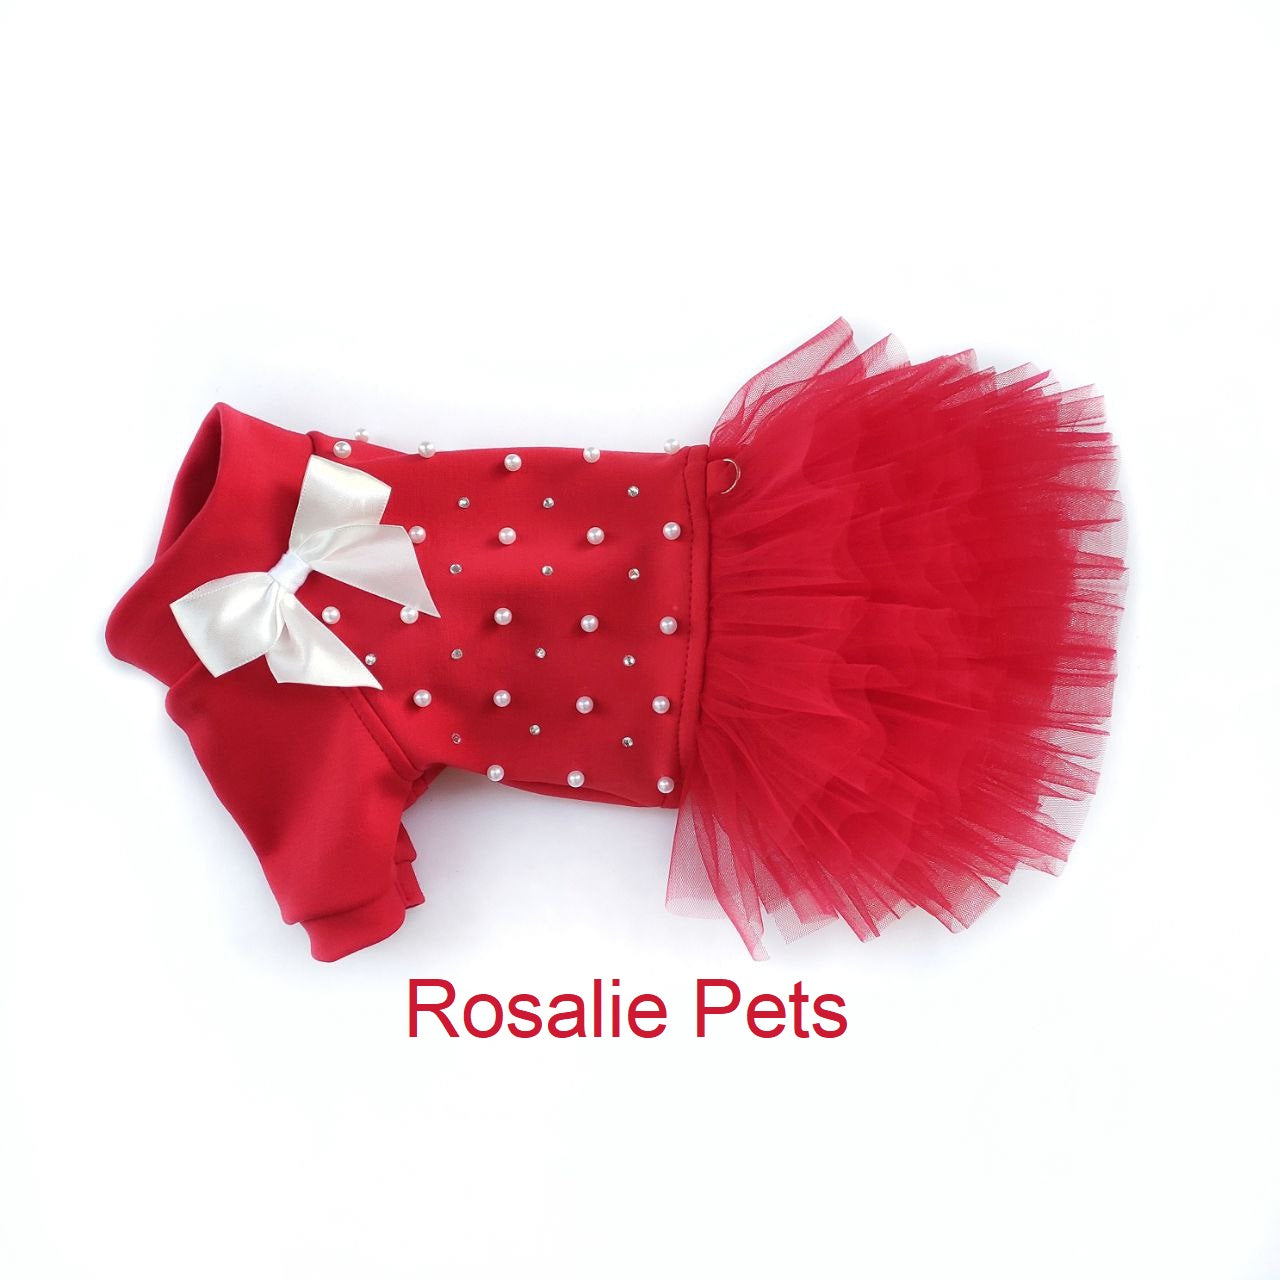 Red dog dress with tutu skirt